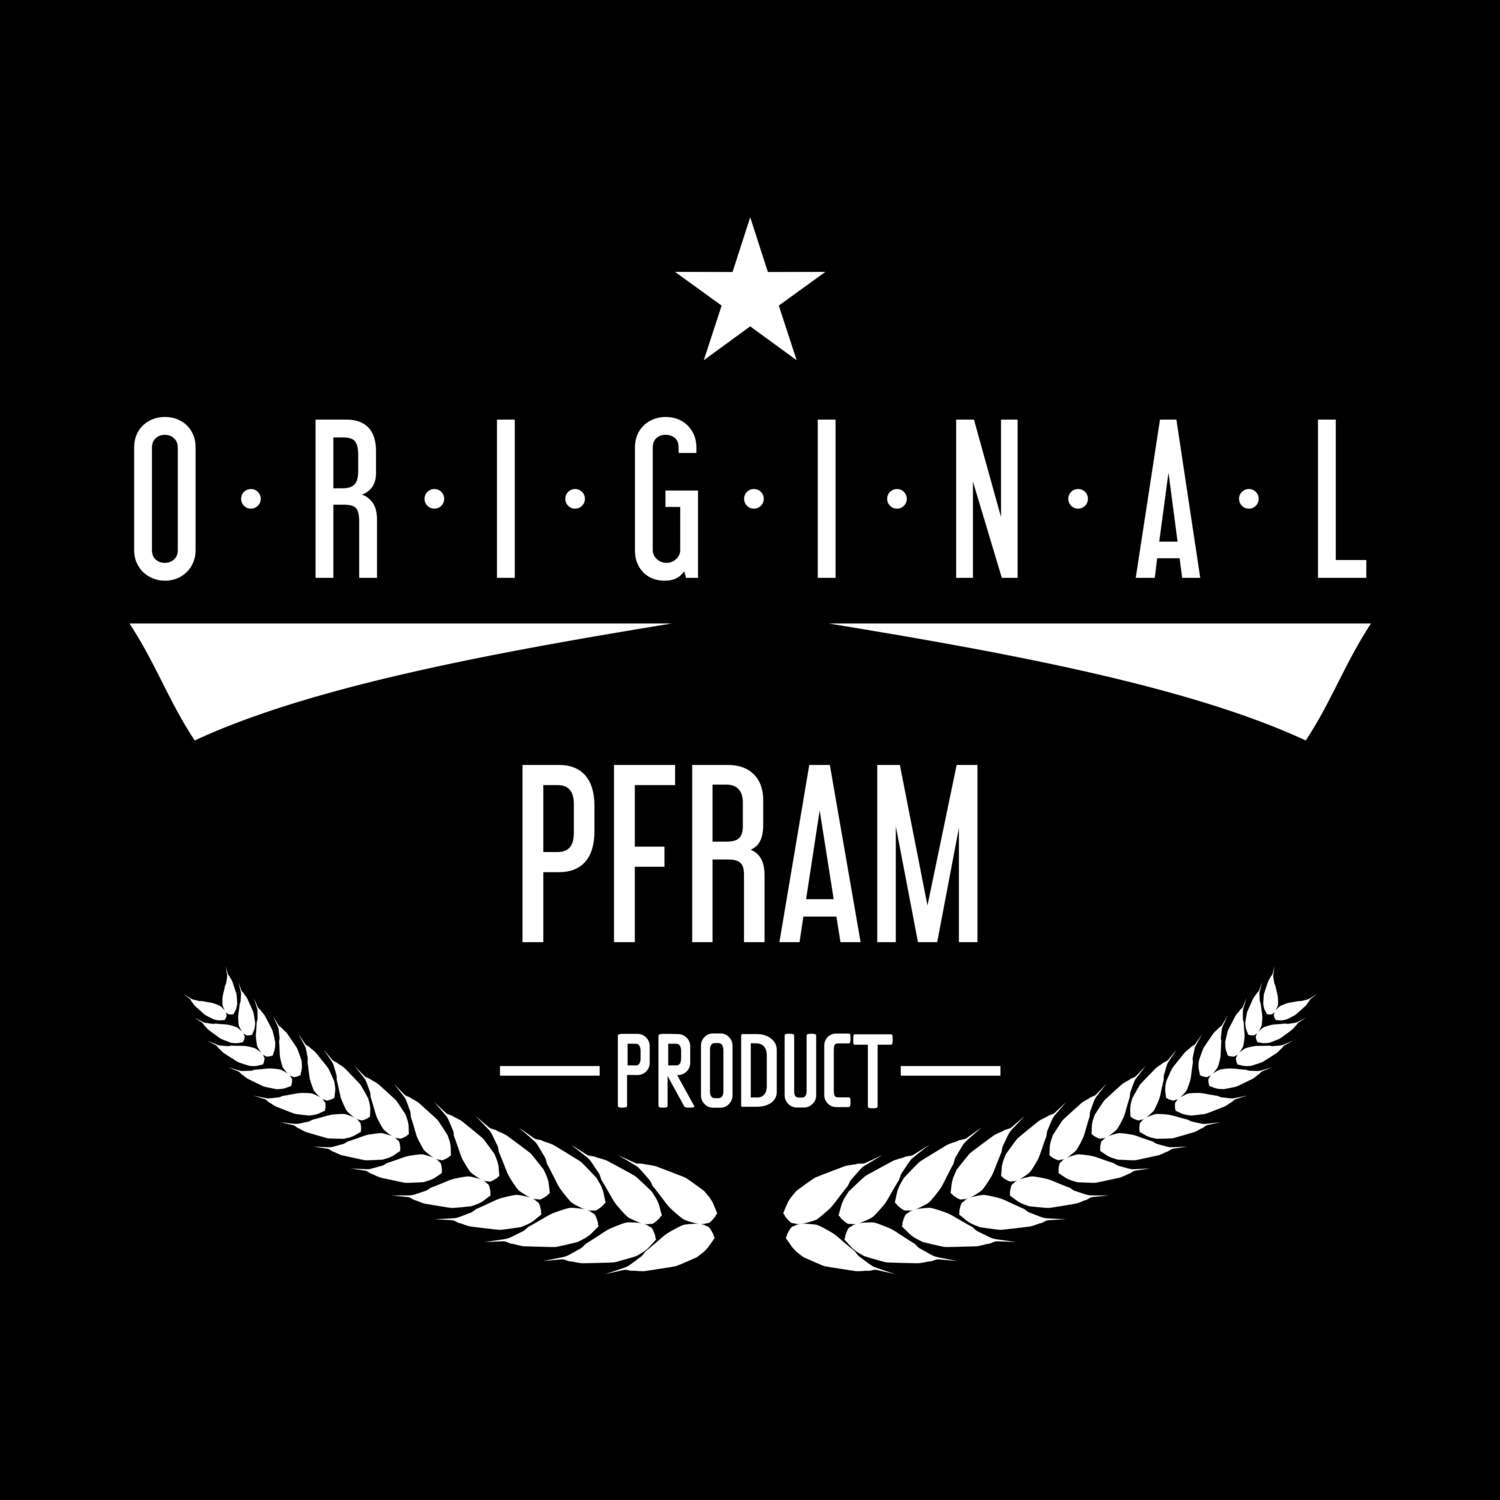 Pfram T-Shirt »Original Product«